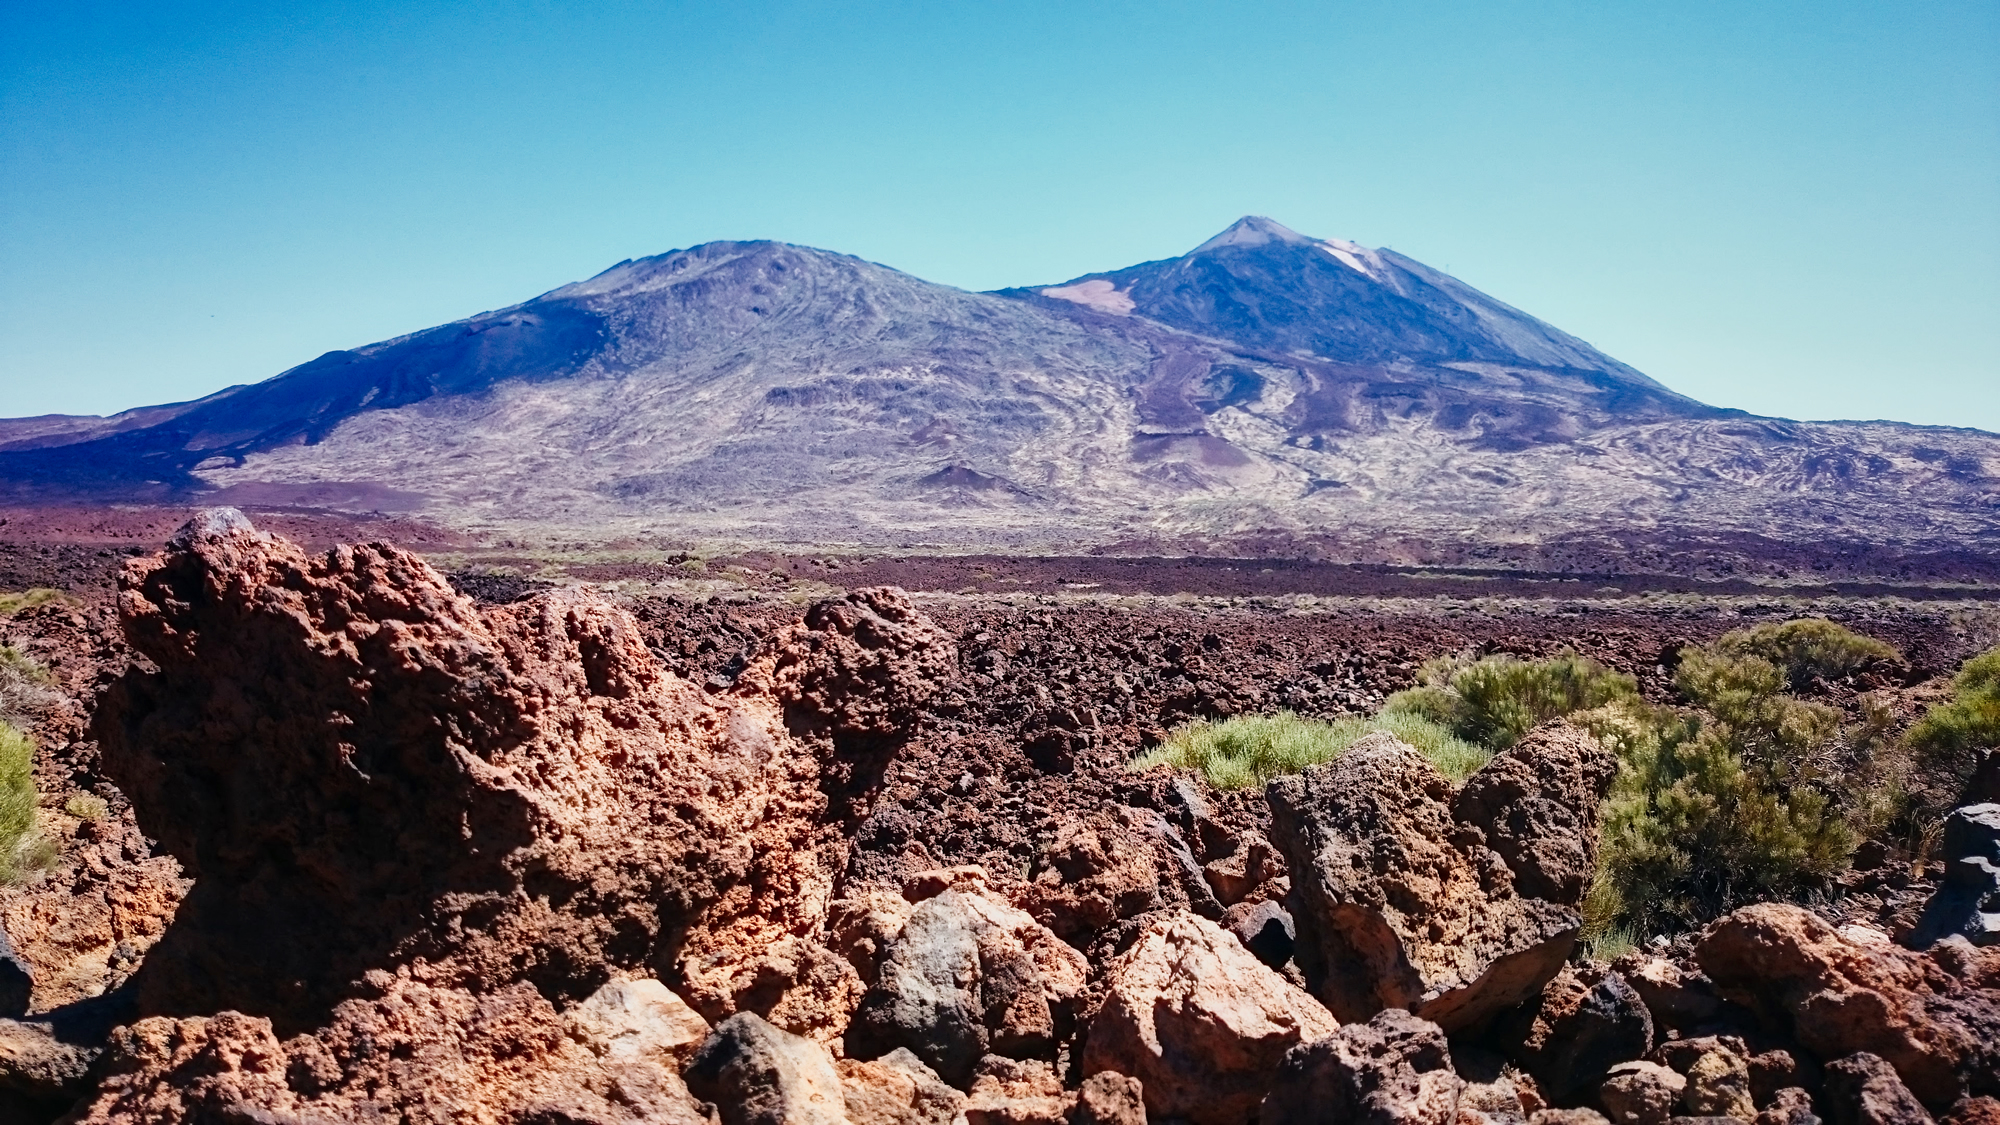 Eruptions on Mount Teide - the history of eruptions on Mount Teide